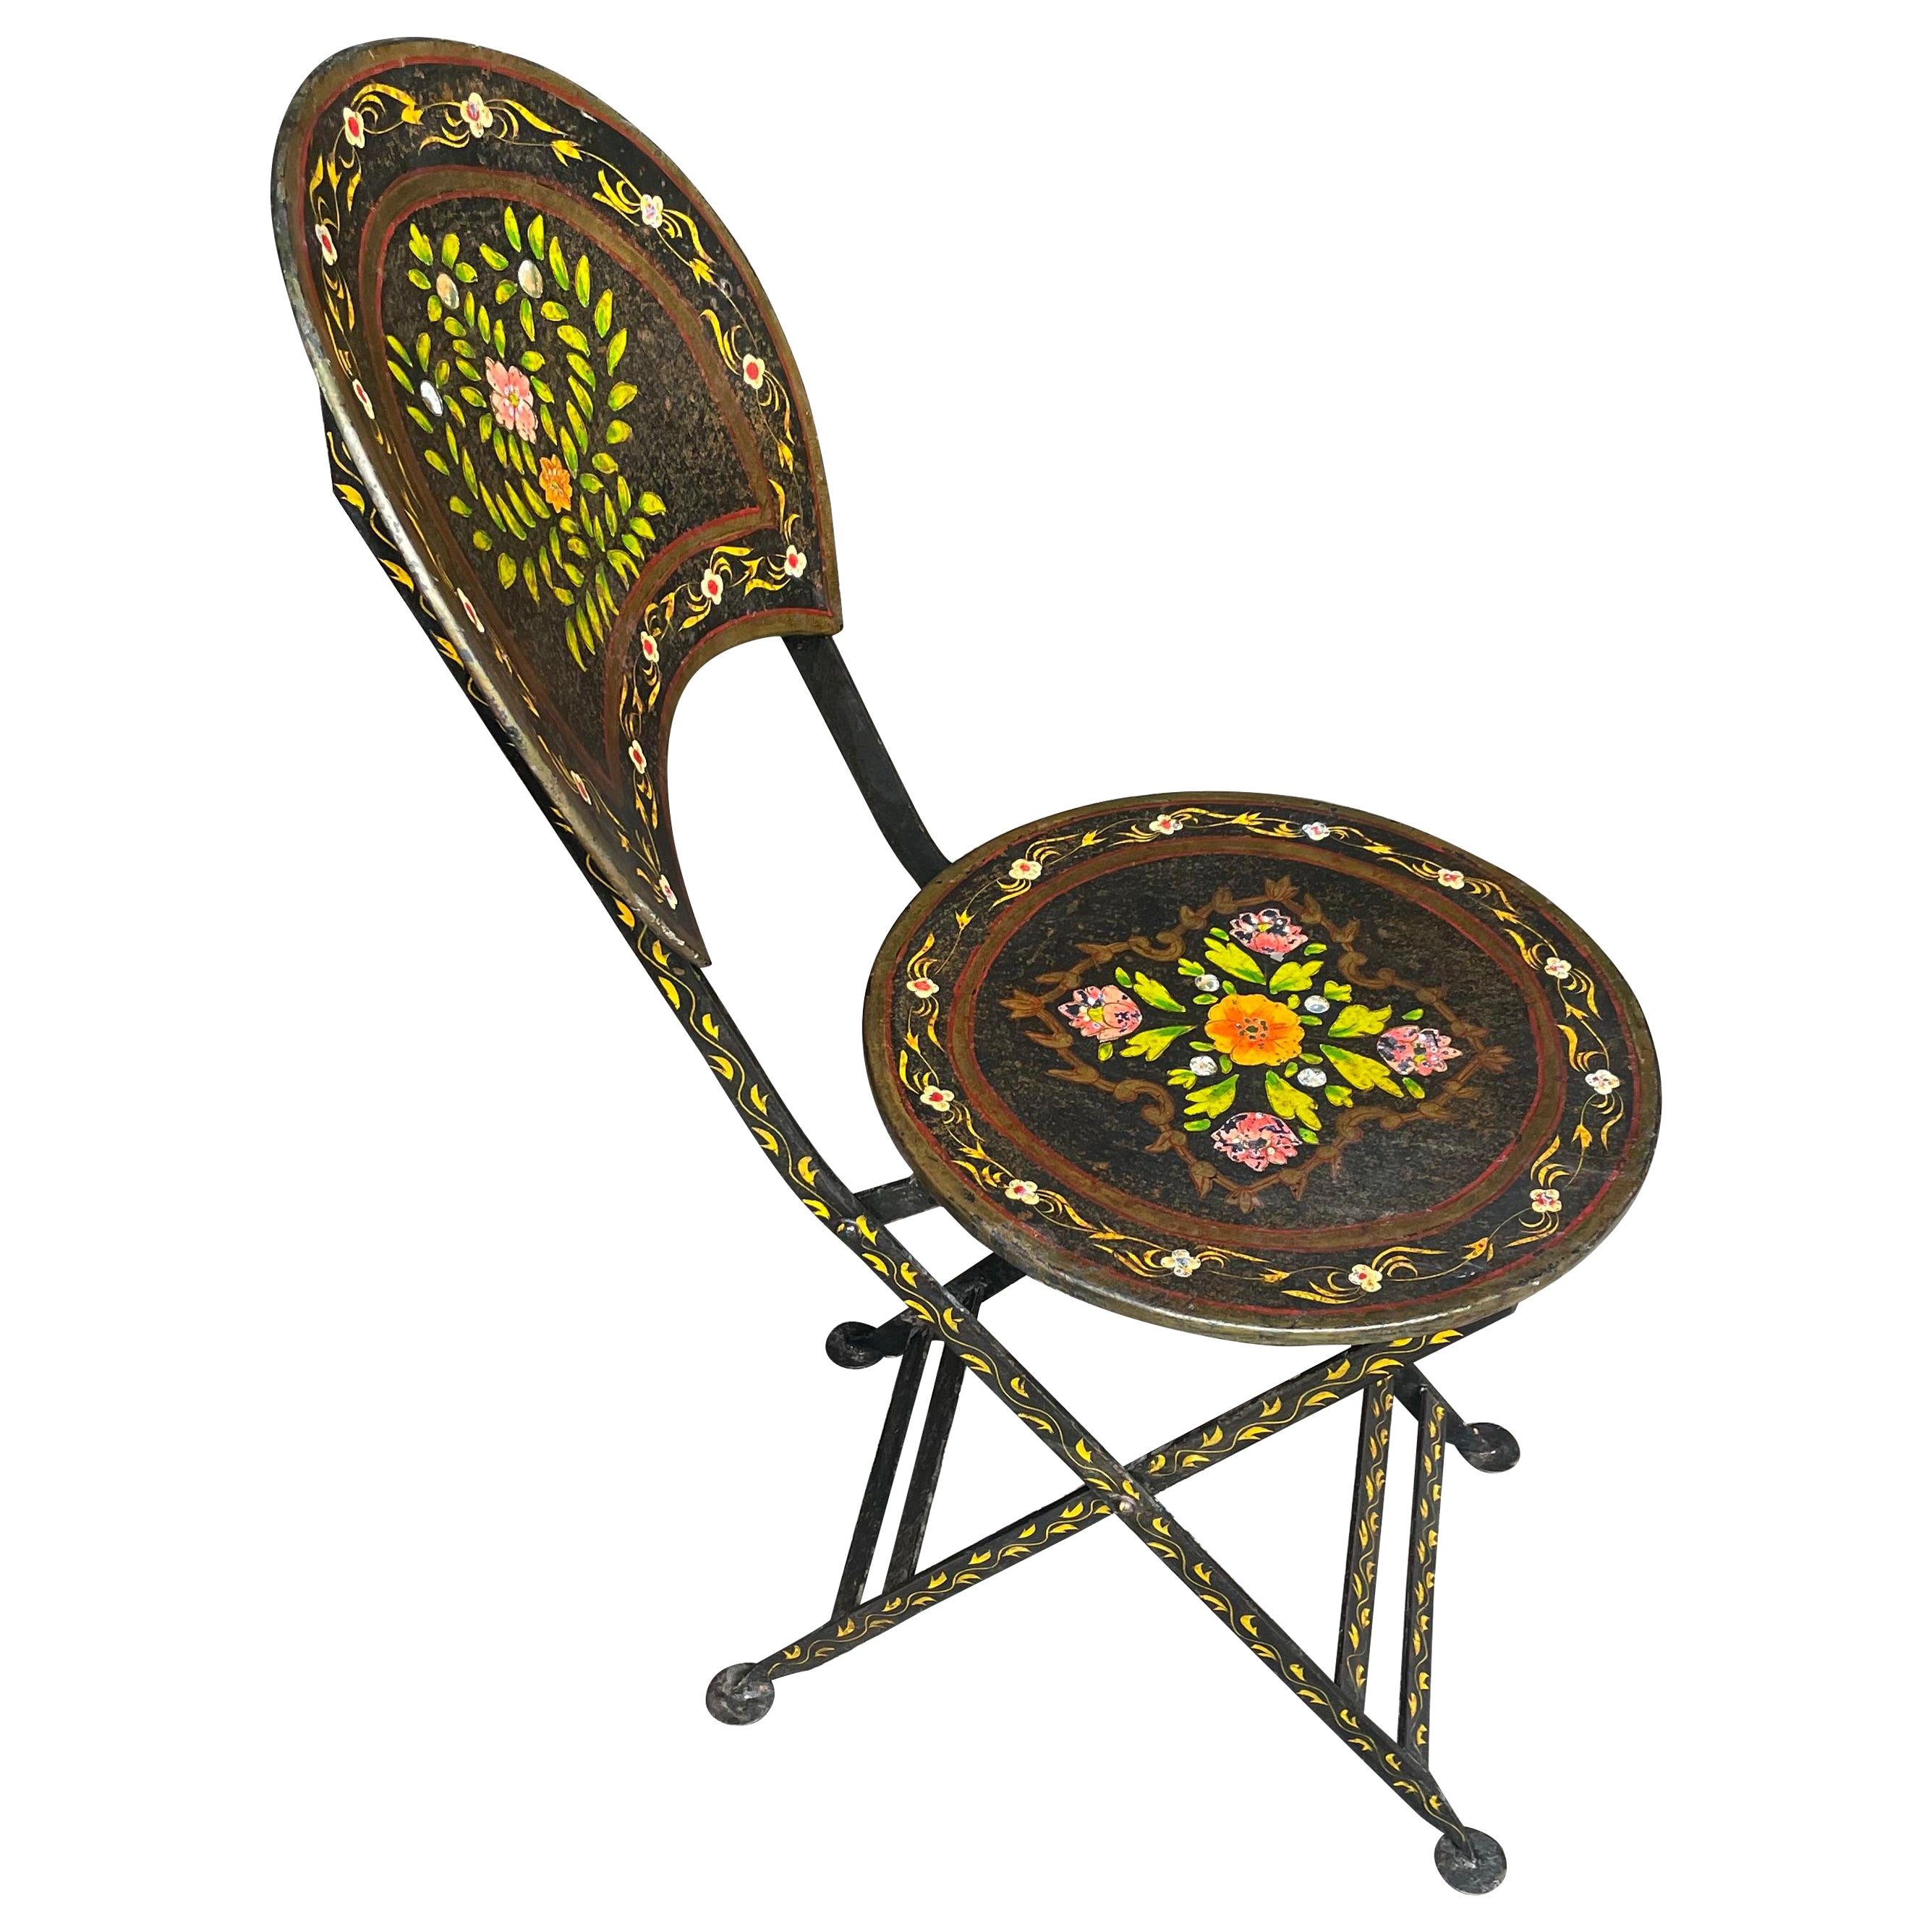 Painted Iron Tyrolian Chair